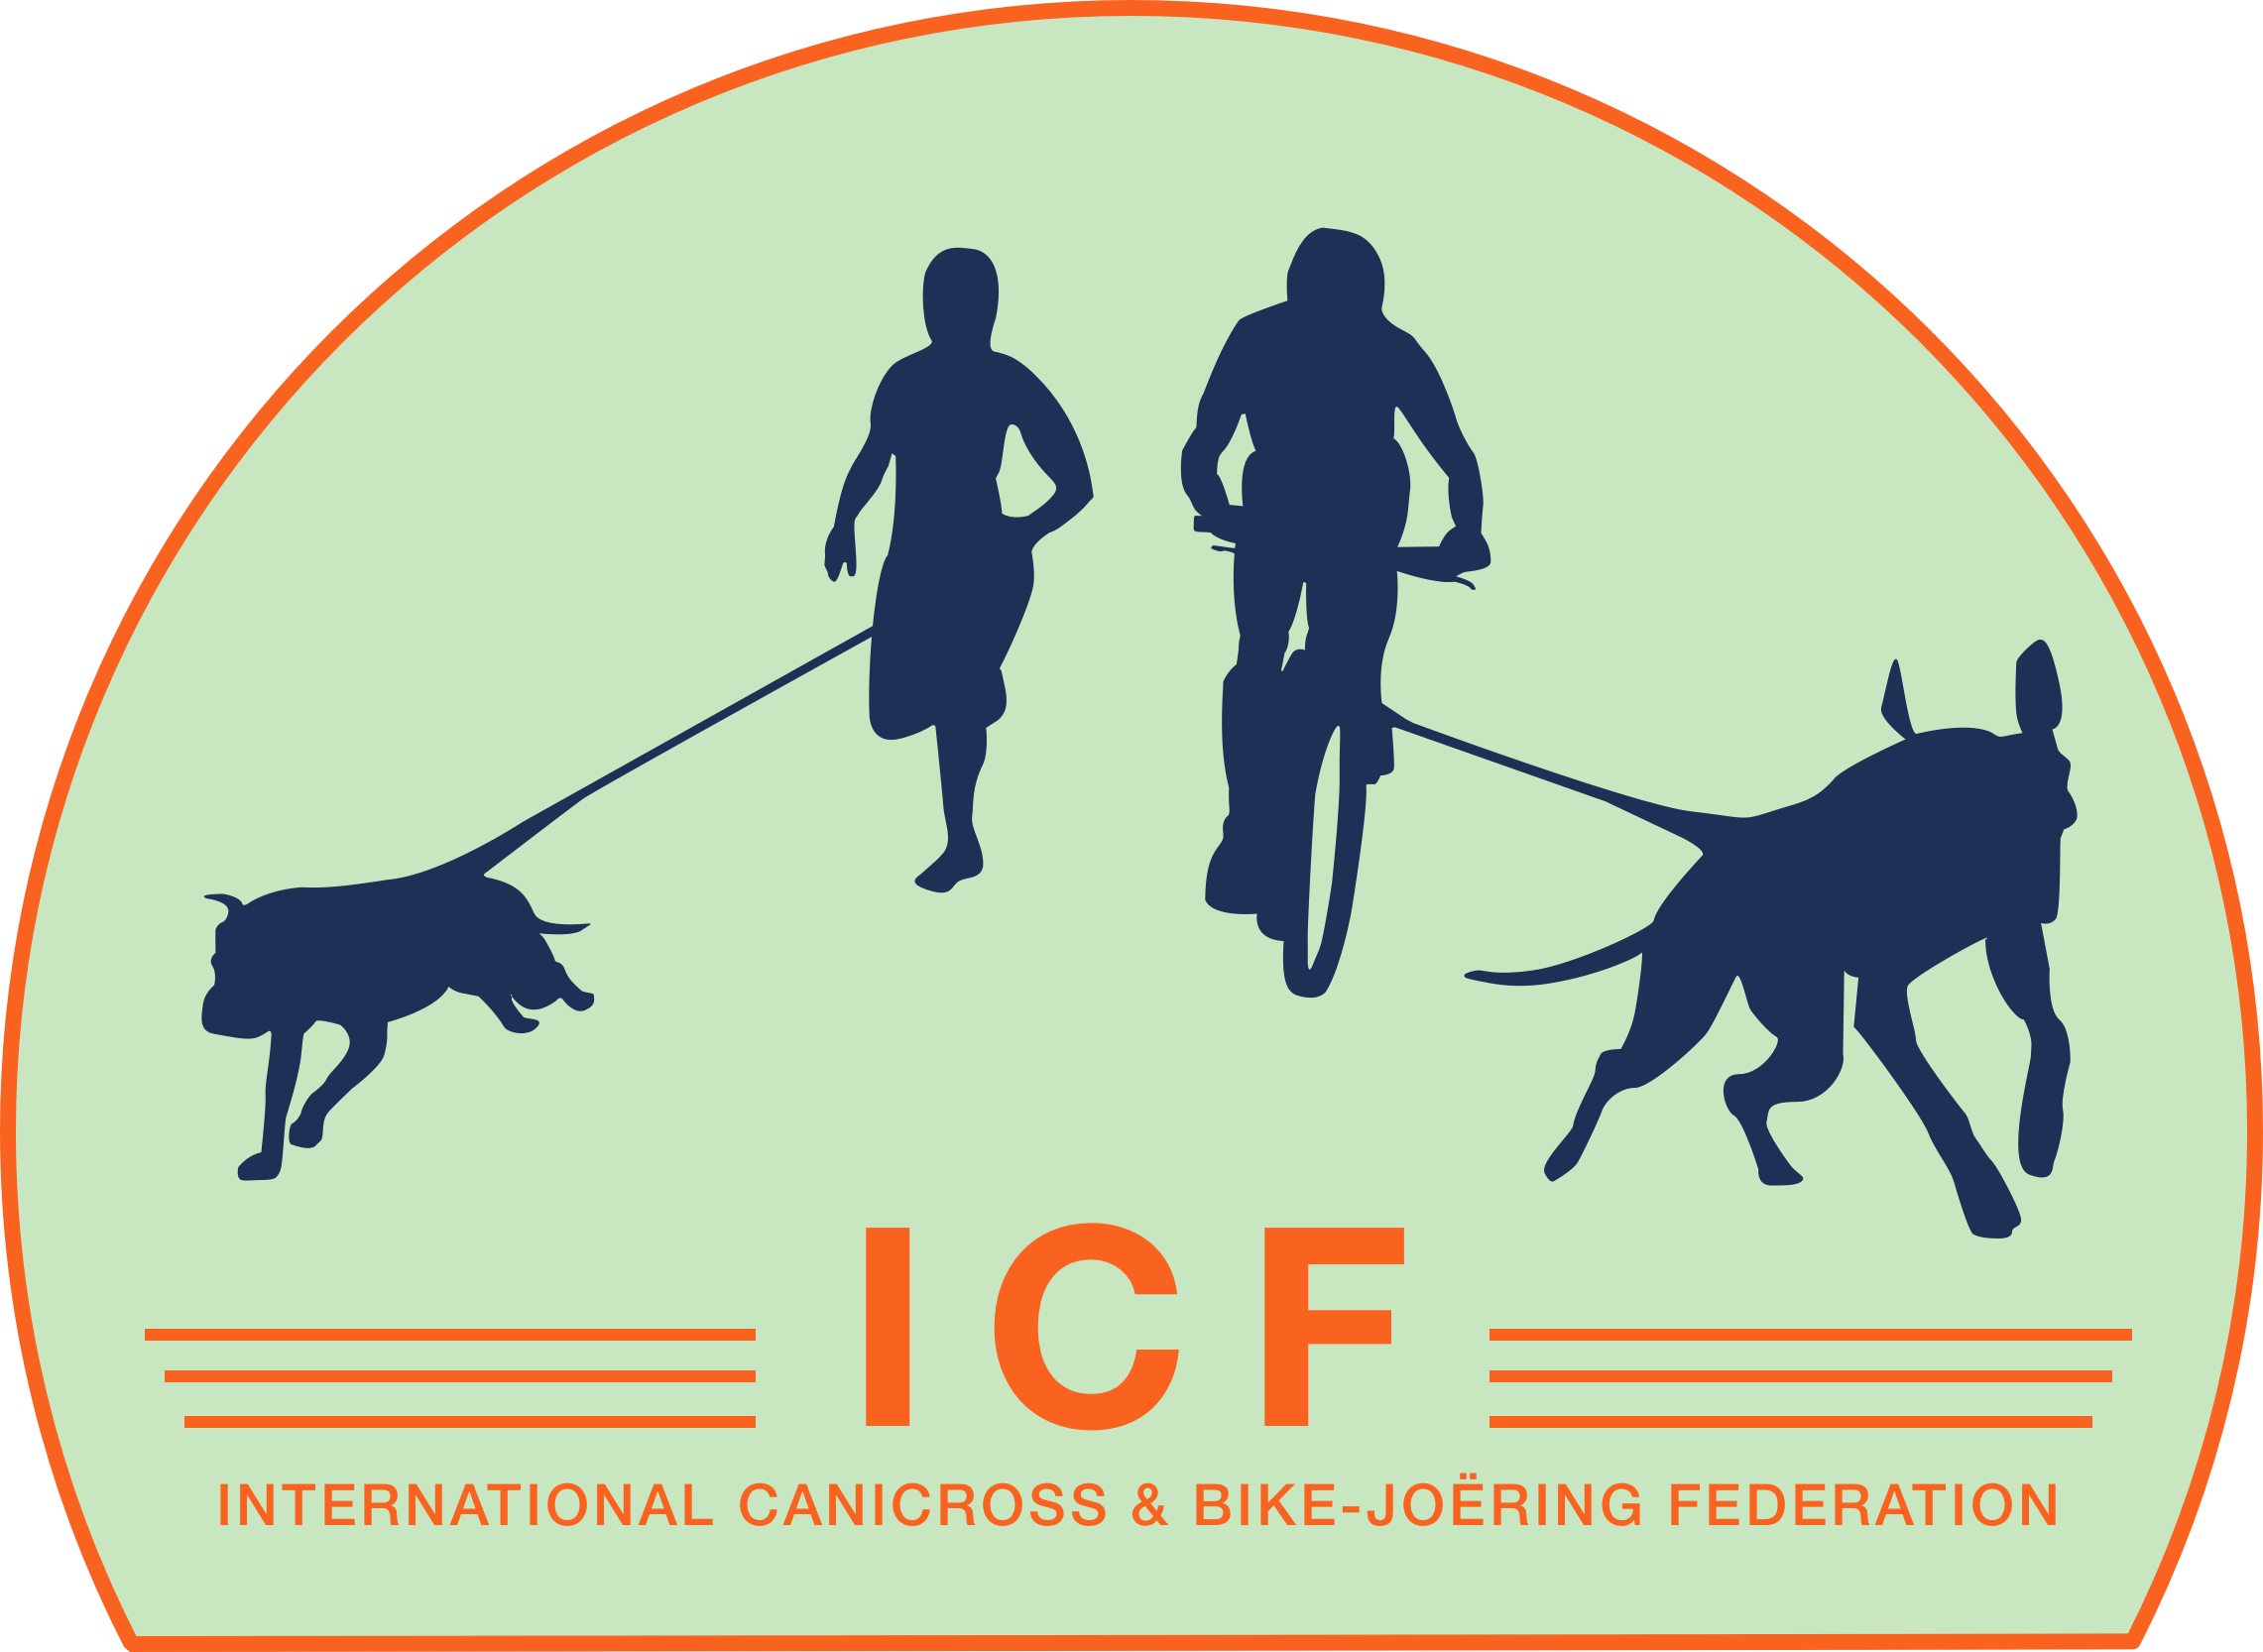 ICF - International Canicross & Bike-Joering Federation